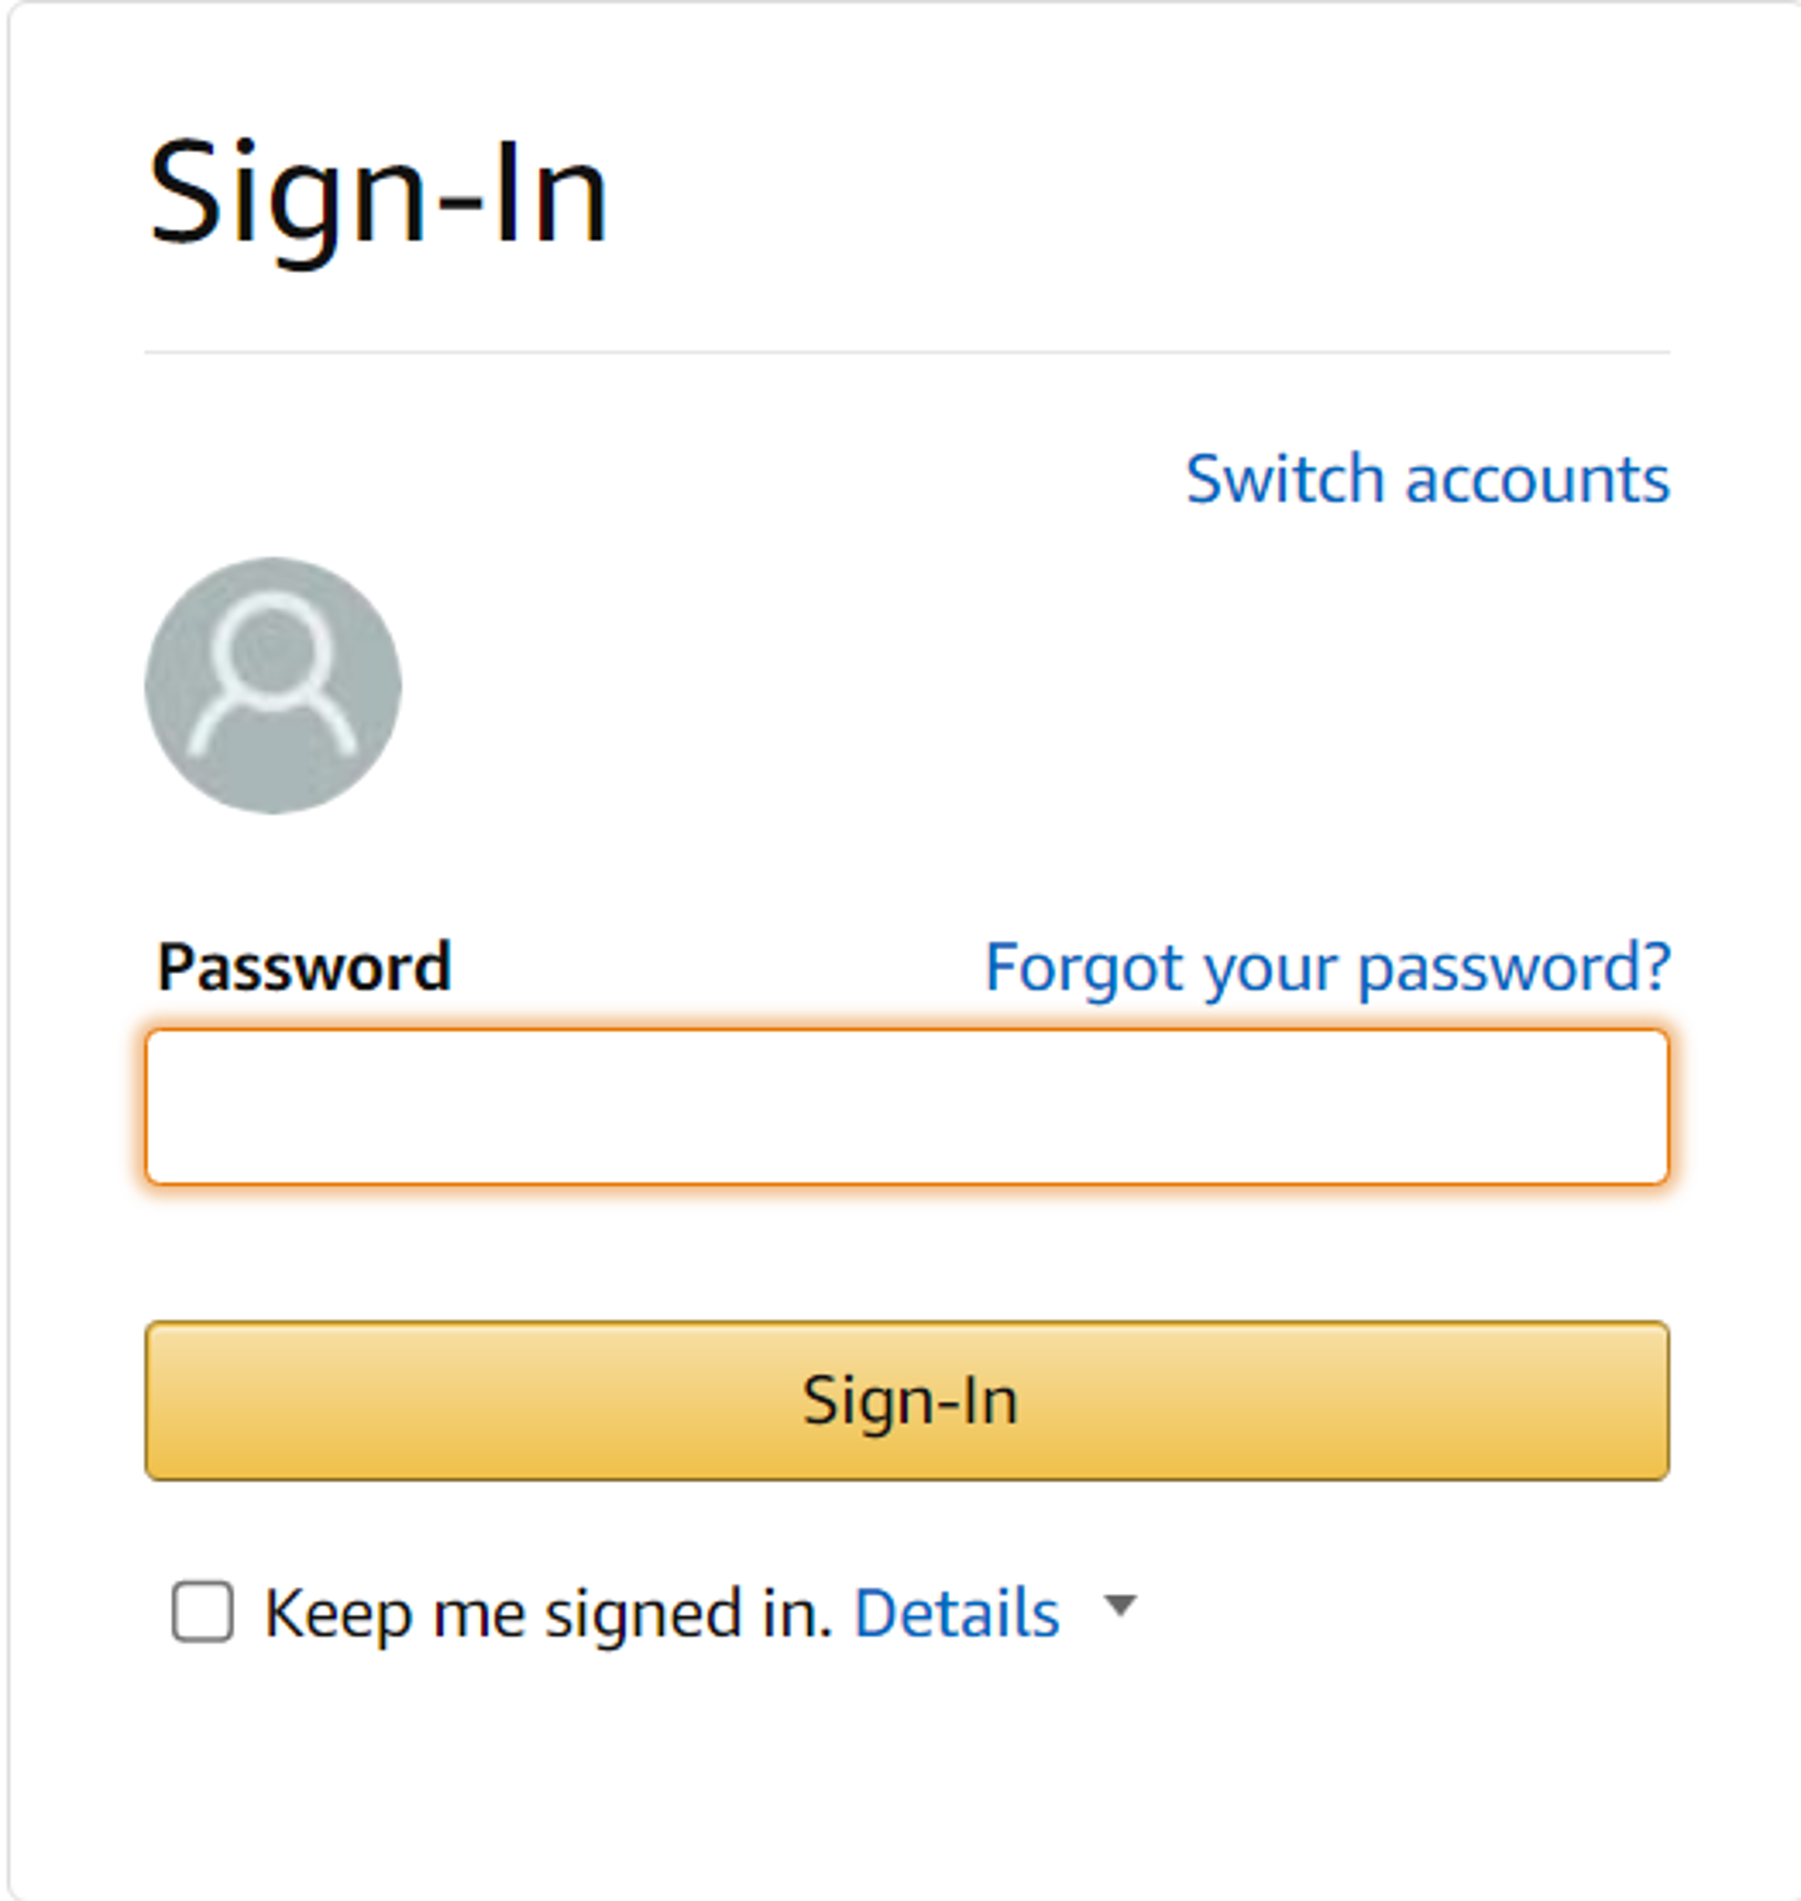 Enter login credentials to log into Amazon Account